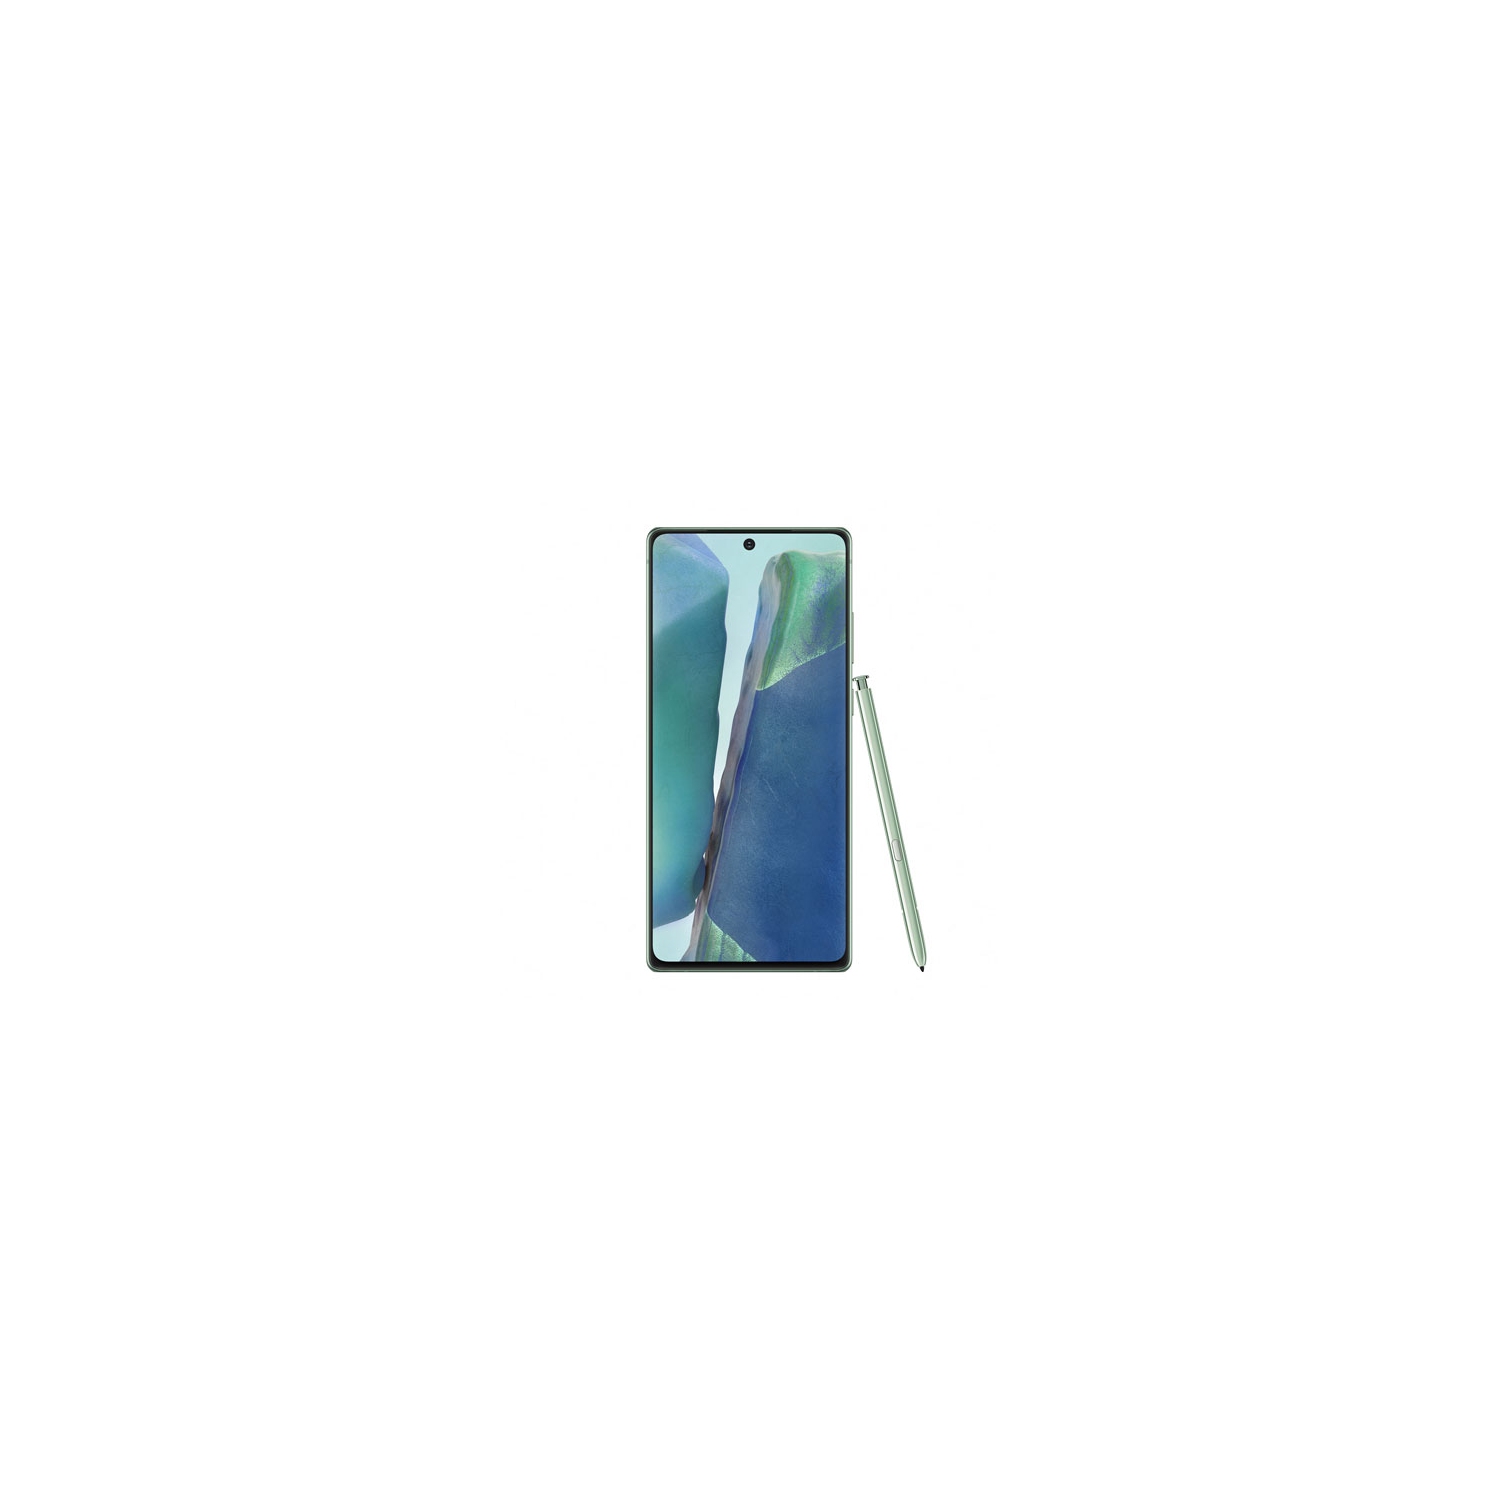 Refurbished (Excellent) - Samsung Galaxy Note 20 128GB Smartphone - Mystic Green - Unlocked - Certified Refurbished